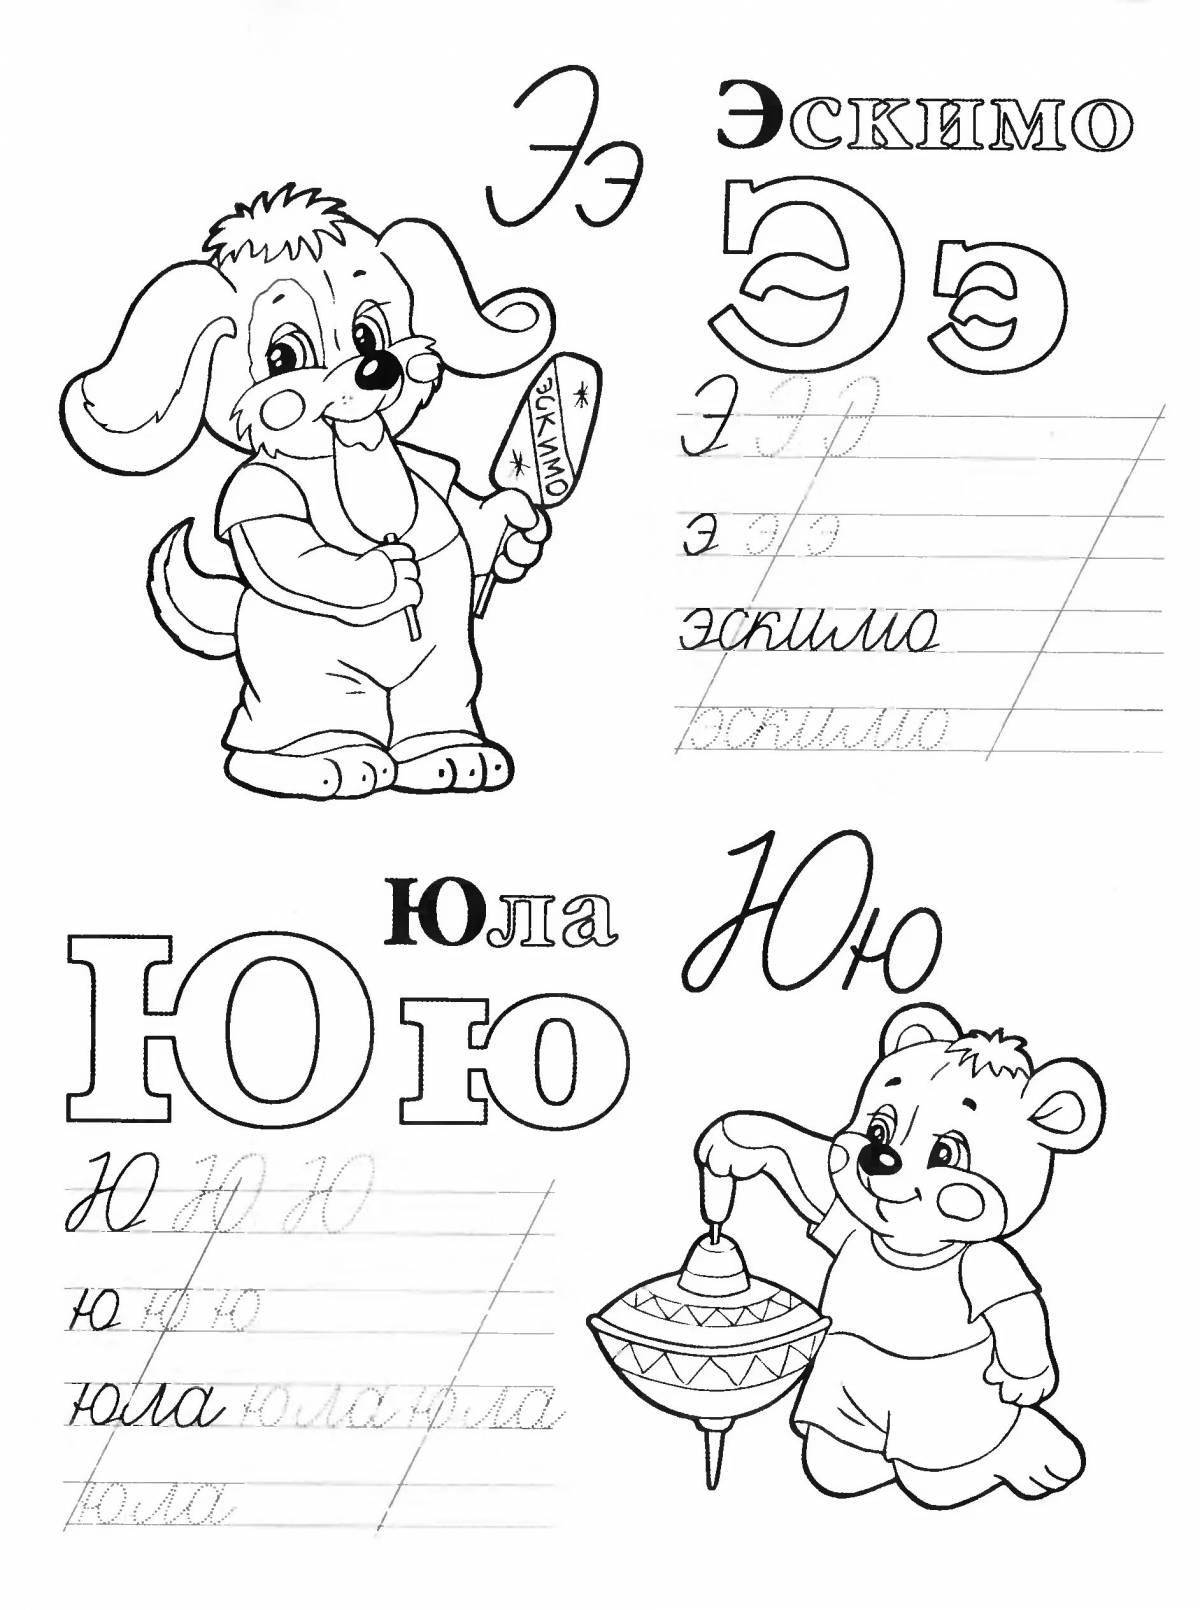 Bright alphabet coloring book for preschoolers